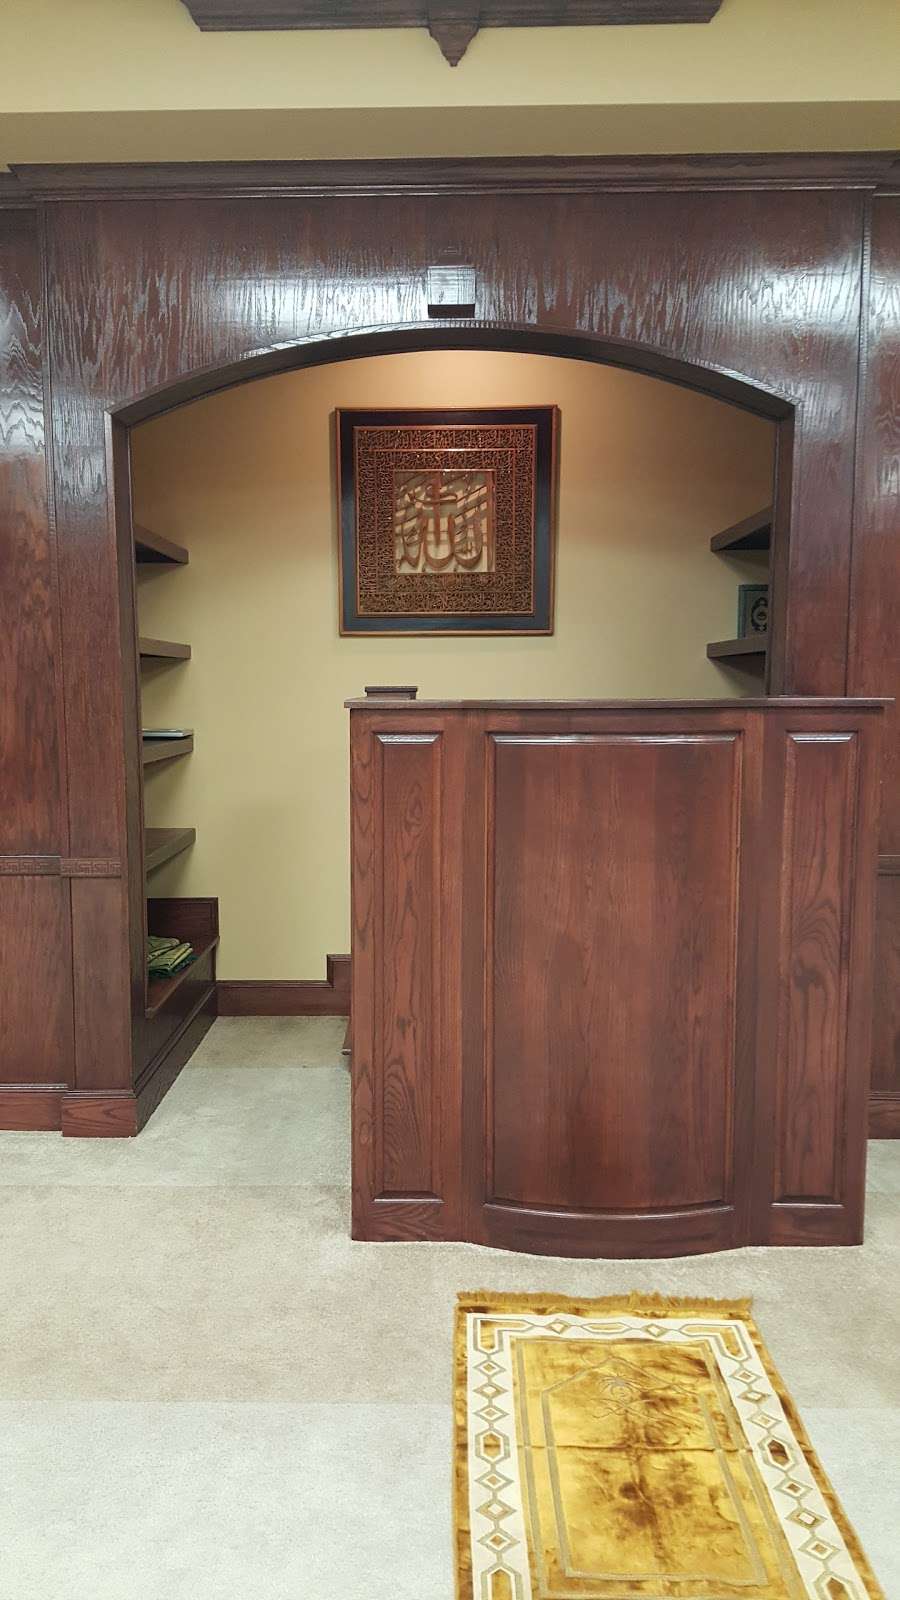 Mercy Community Center - Masjid | 5922 Hillcroft St # C, Houston, TX 77036 | Phone: (713) 780-2880